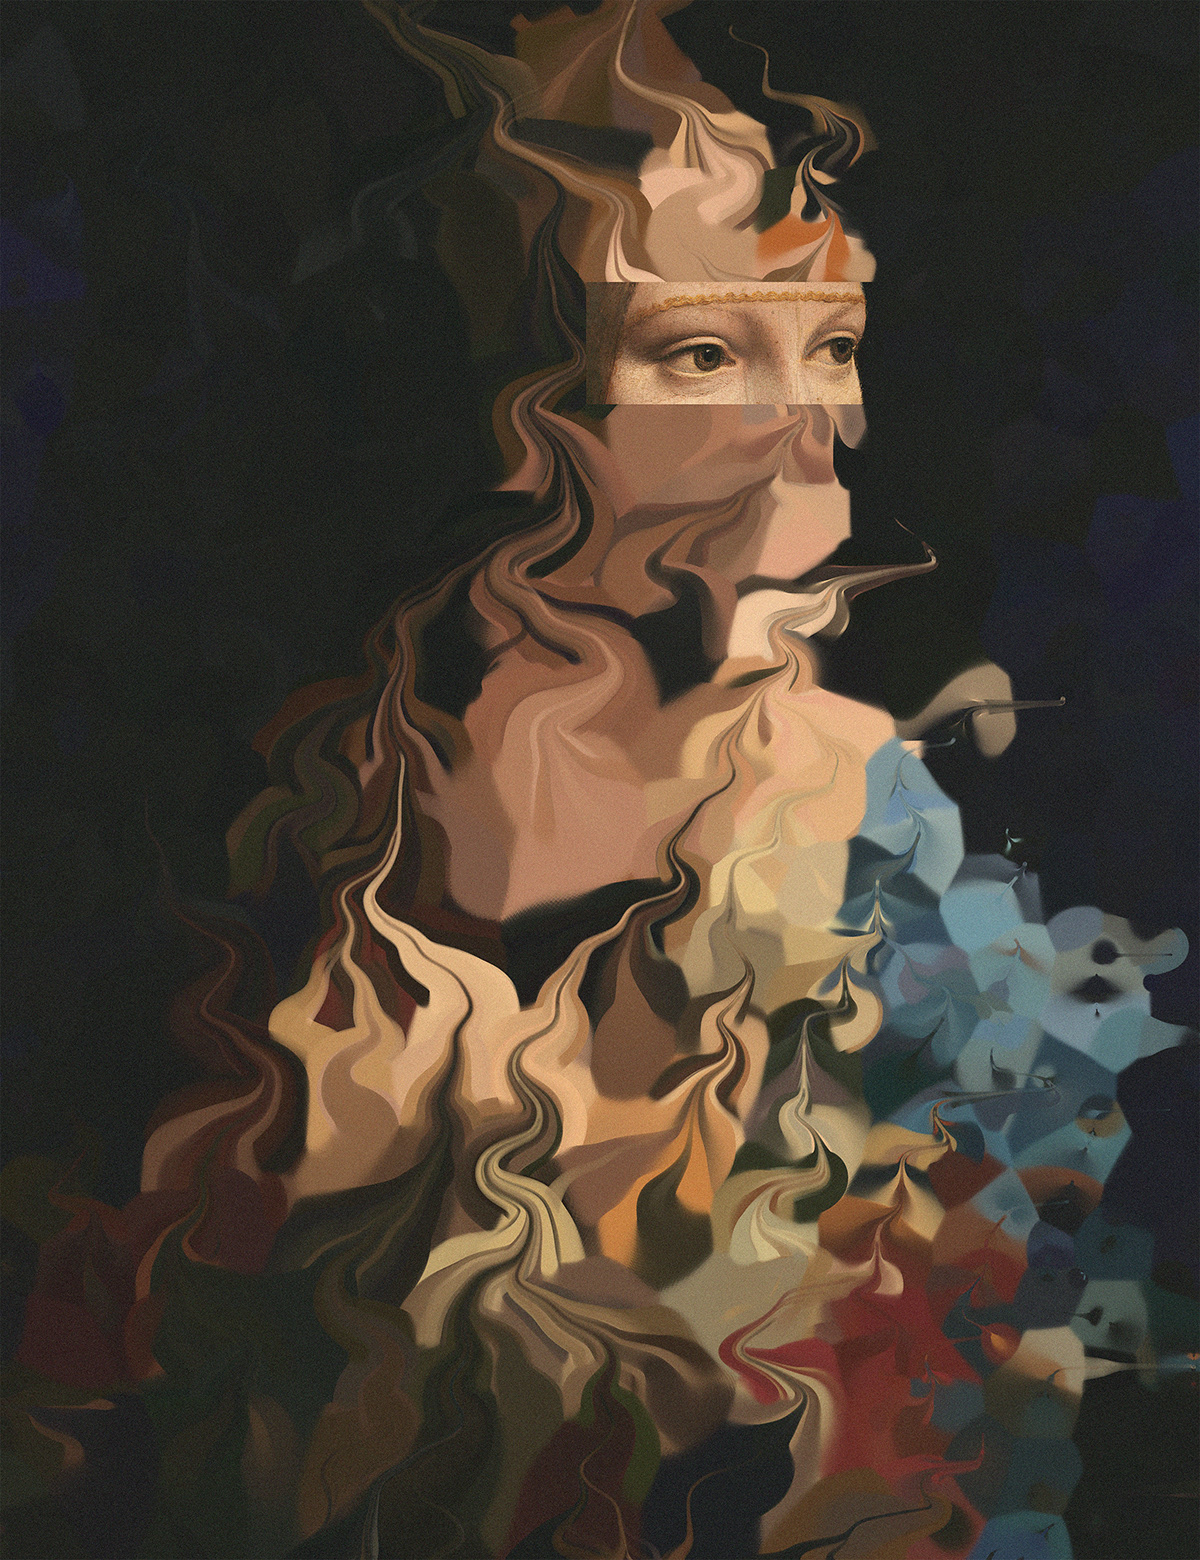 artwork processing abstract generative art graphics geometric portrait poster design